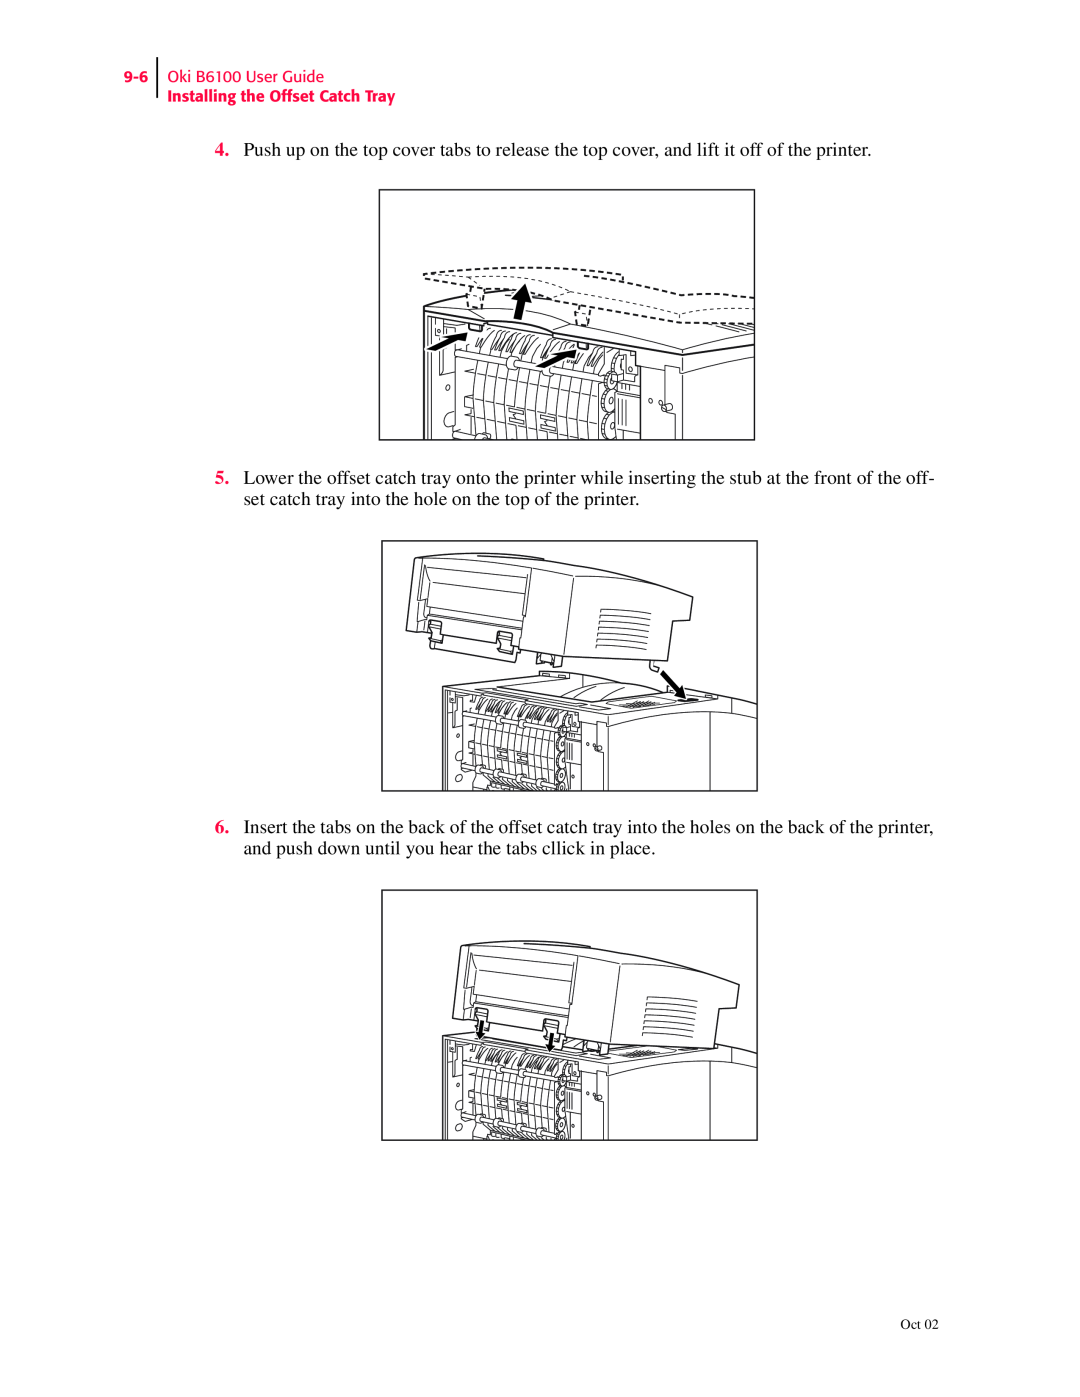 Oki manual Oki B6100 User Guide Installing the Offset Catch Tray 